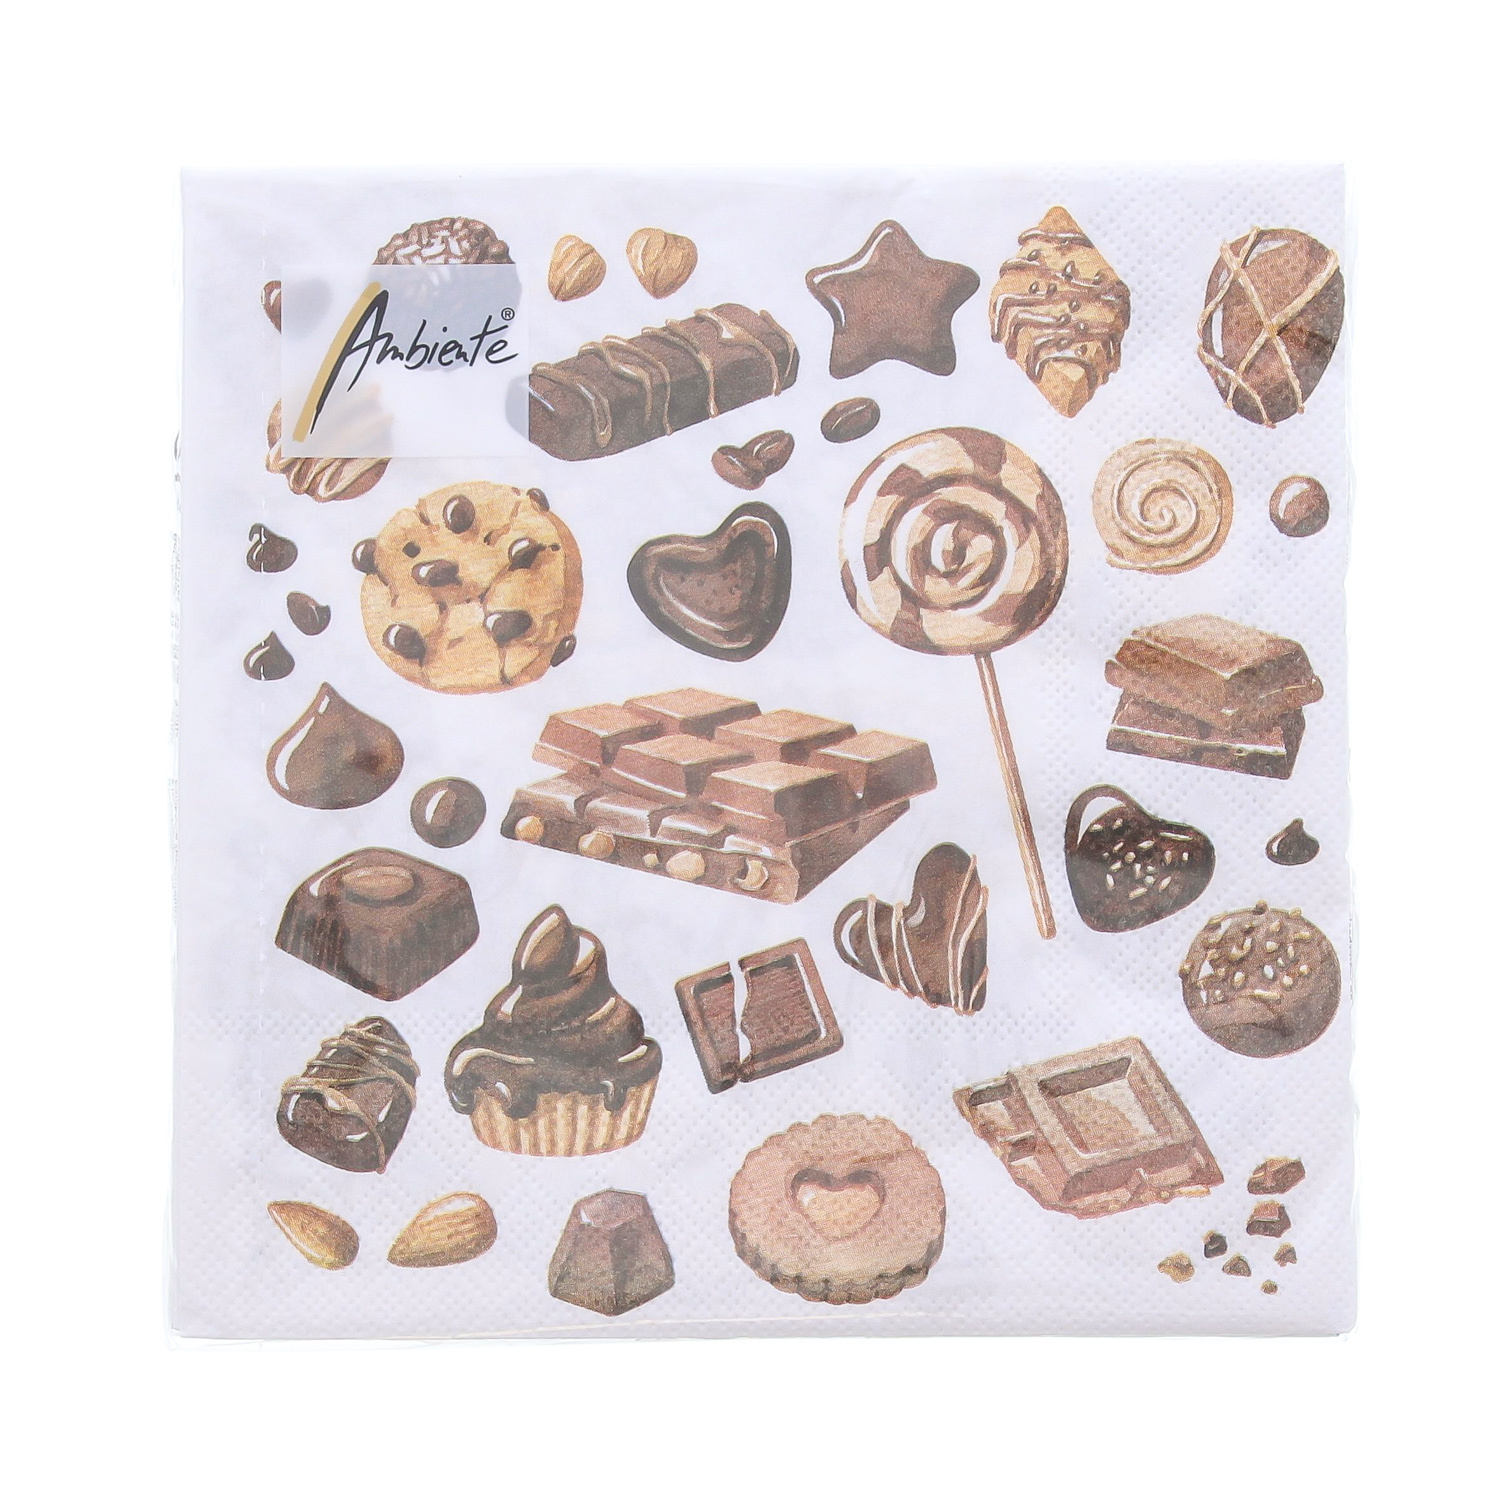 Servet Sweet chocolates 33 cm x 33 cm - 165*165*25 mm - 1 pakje met 20 servetten